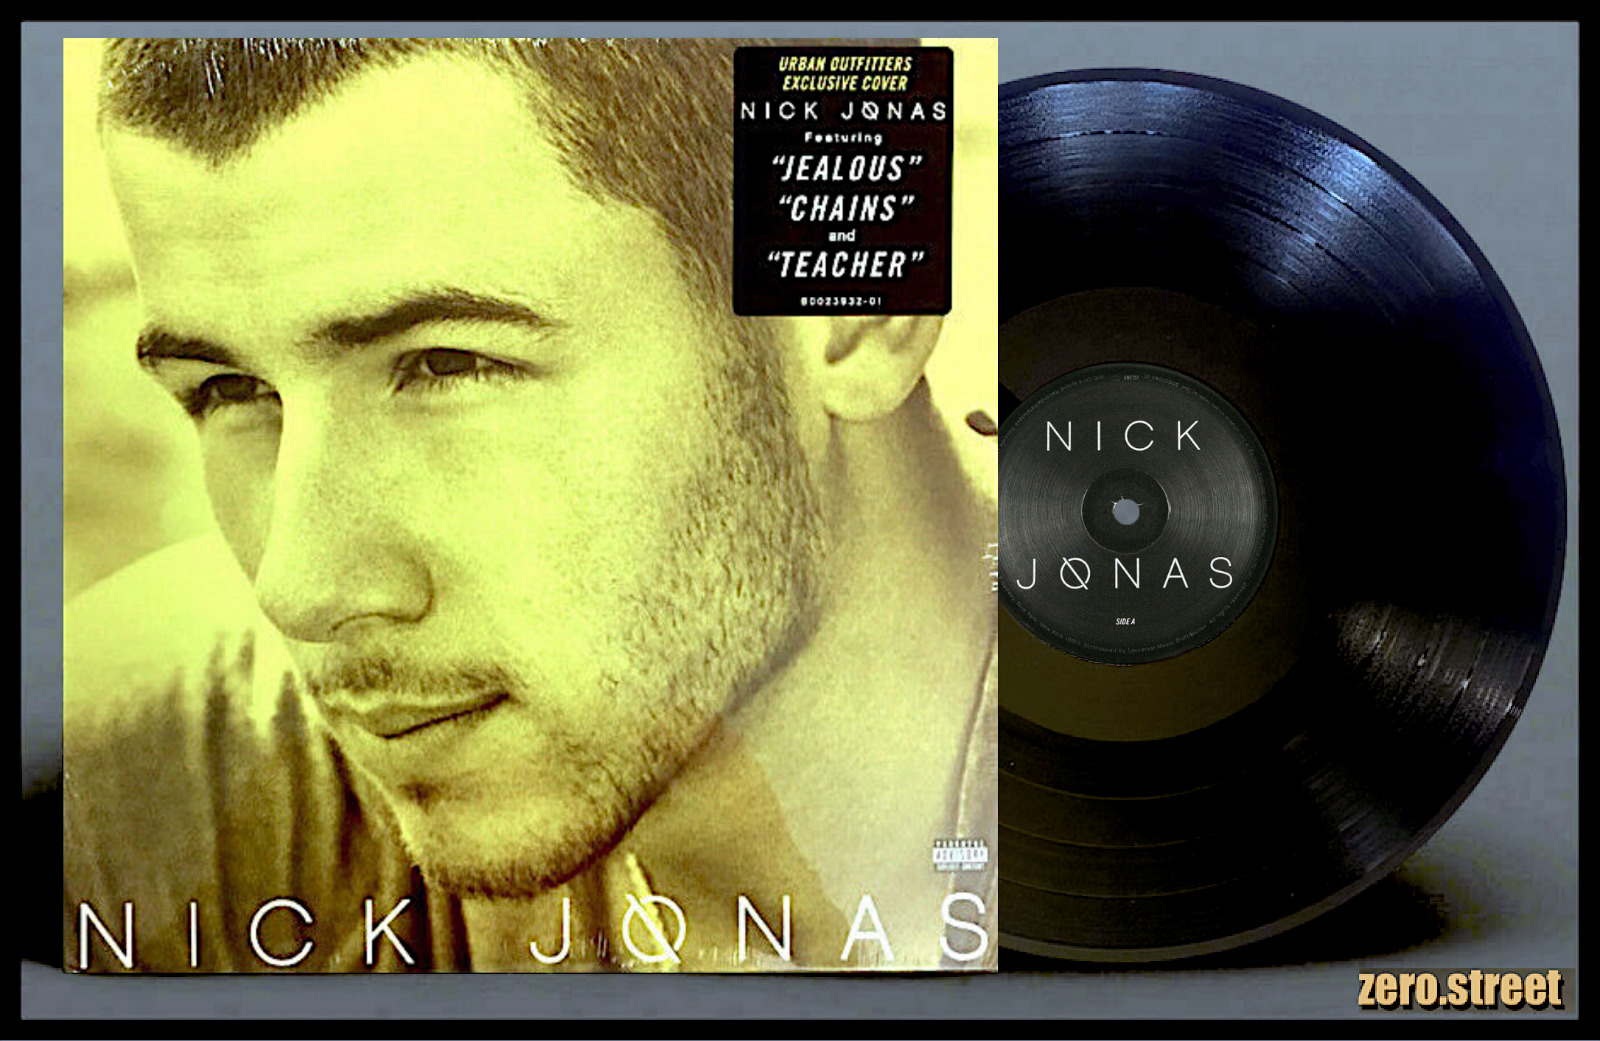 NICK JONAS Self Titled LP on BLACK VINYL New SEALED Jealous Chains Teacher